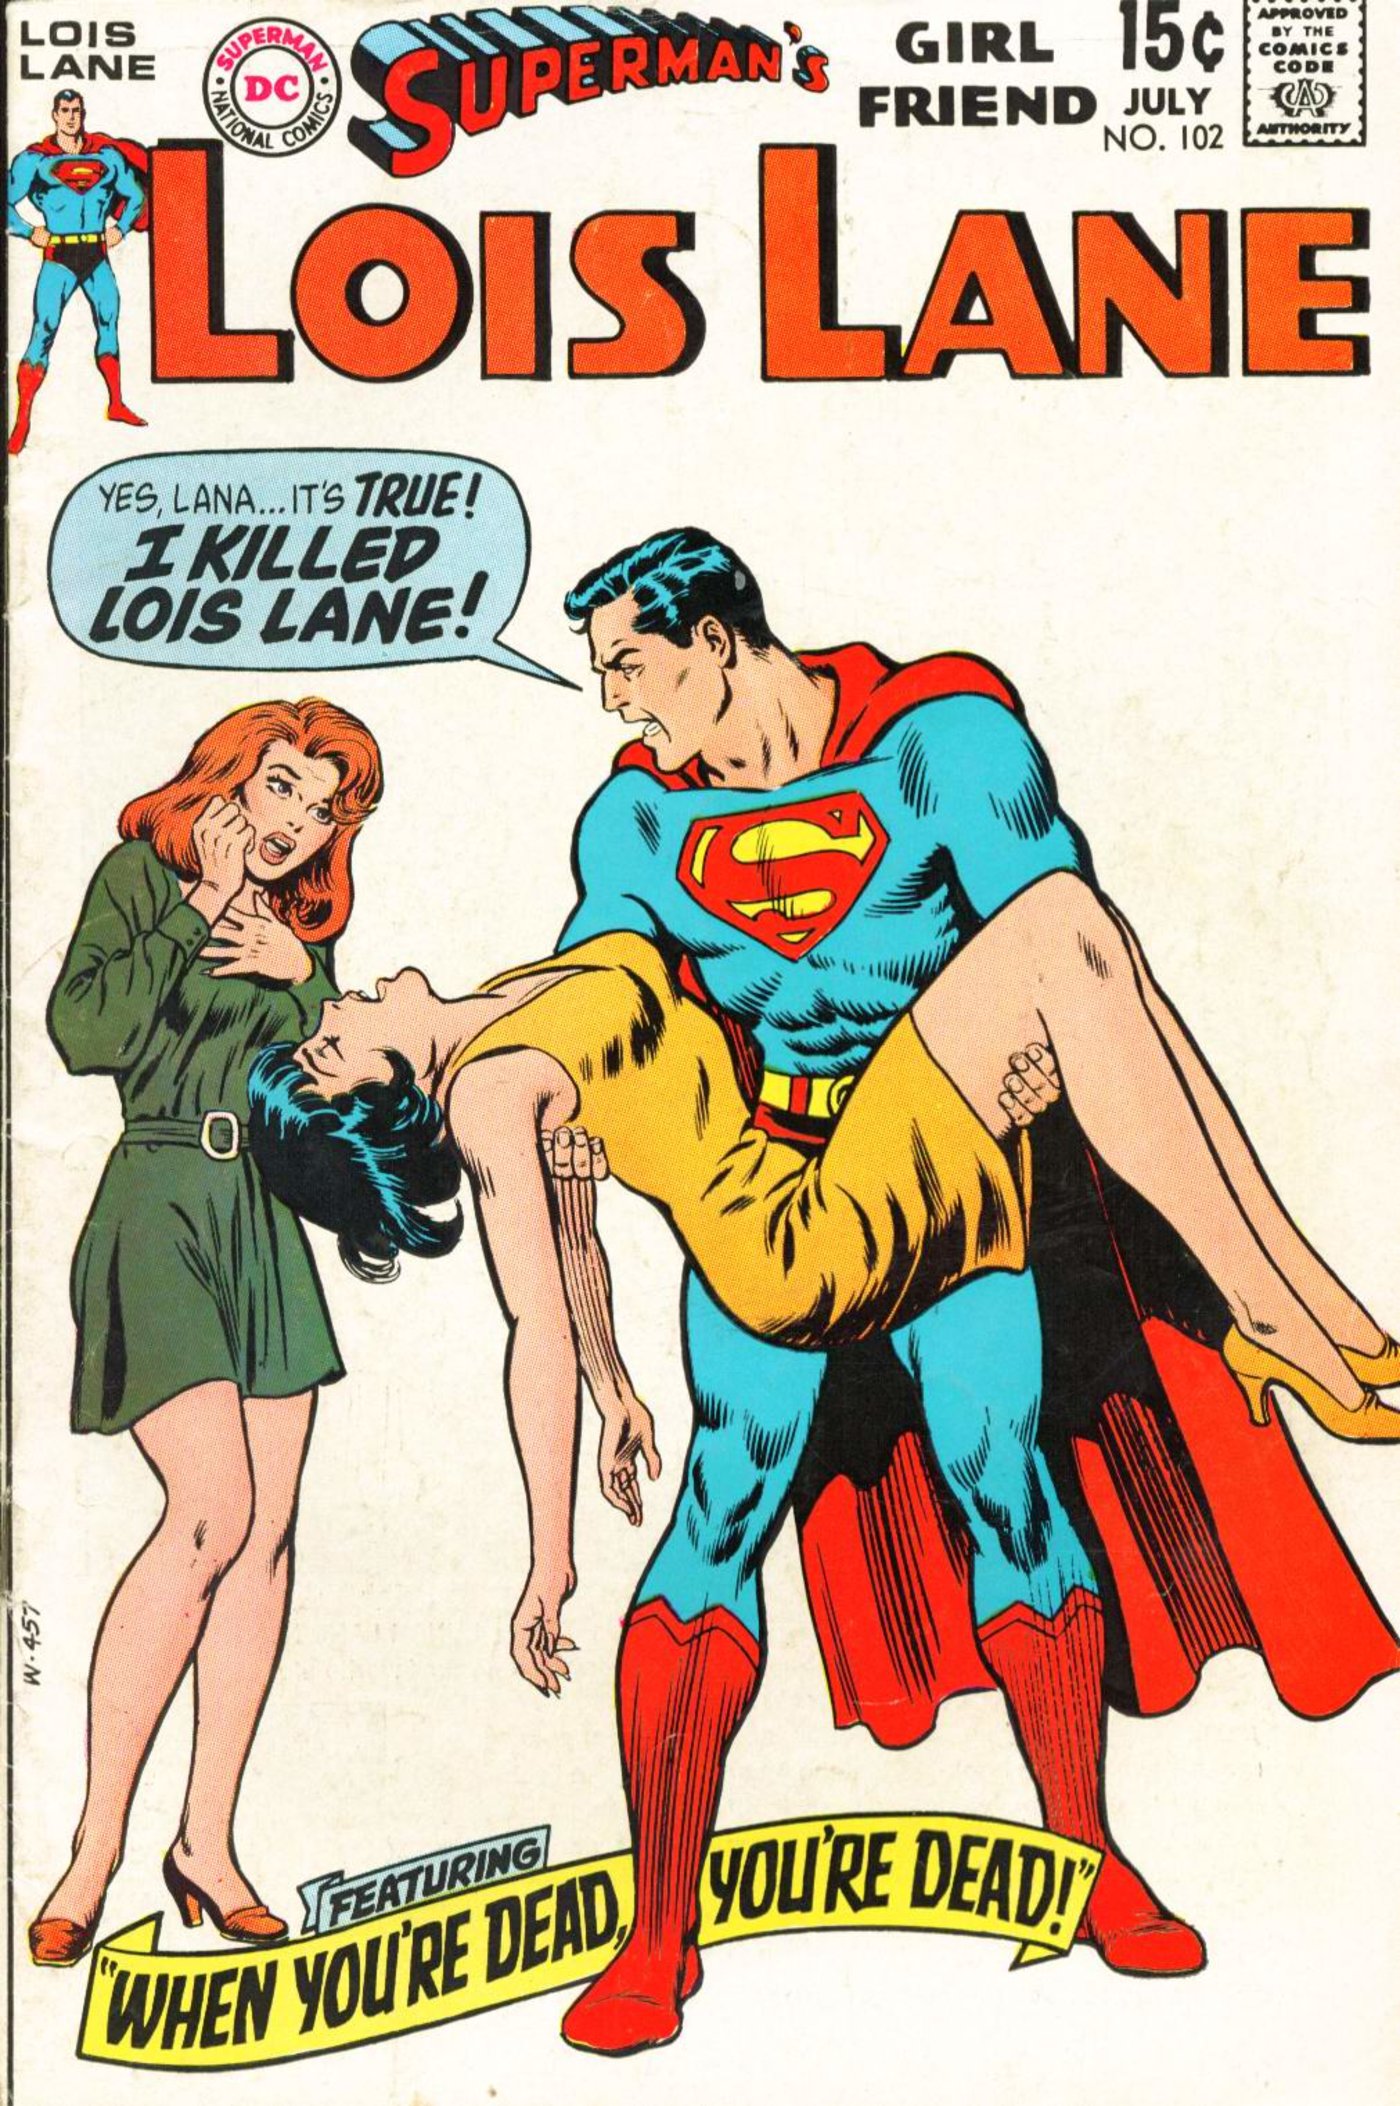 Hakes Supermans Girl Friend Lois Lane 102 Comic Book Page Original Art By Curt Swan